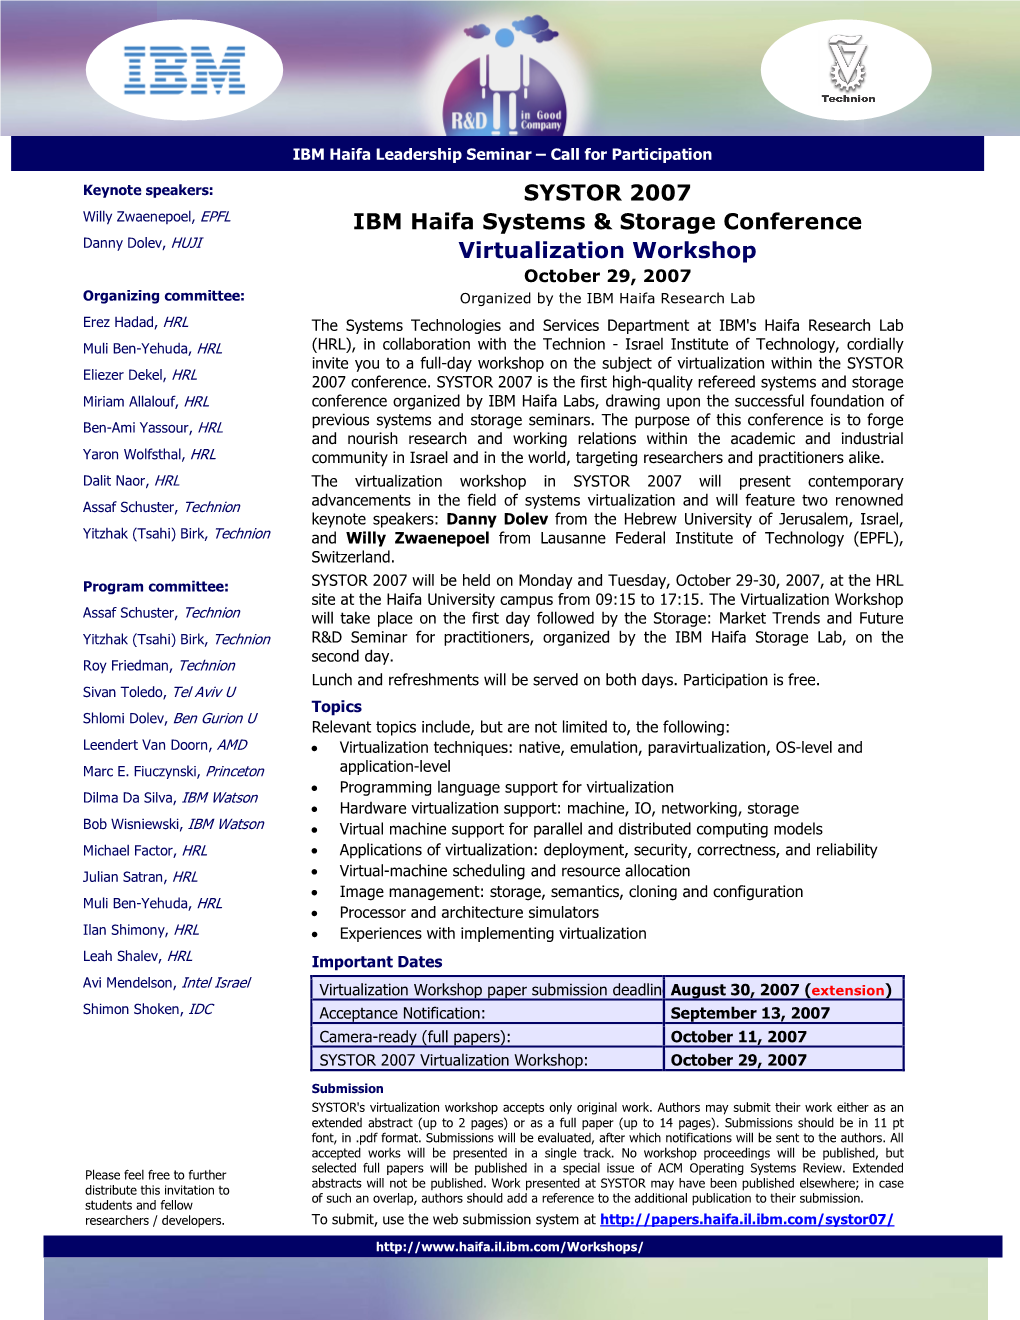 SYSTOR 2007 IBM Haifa Systems & Storage Conference Virtualization